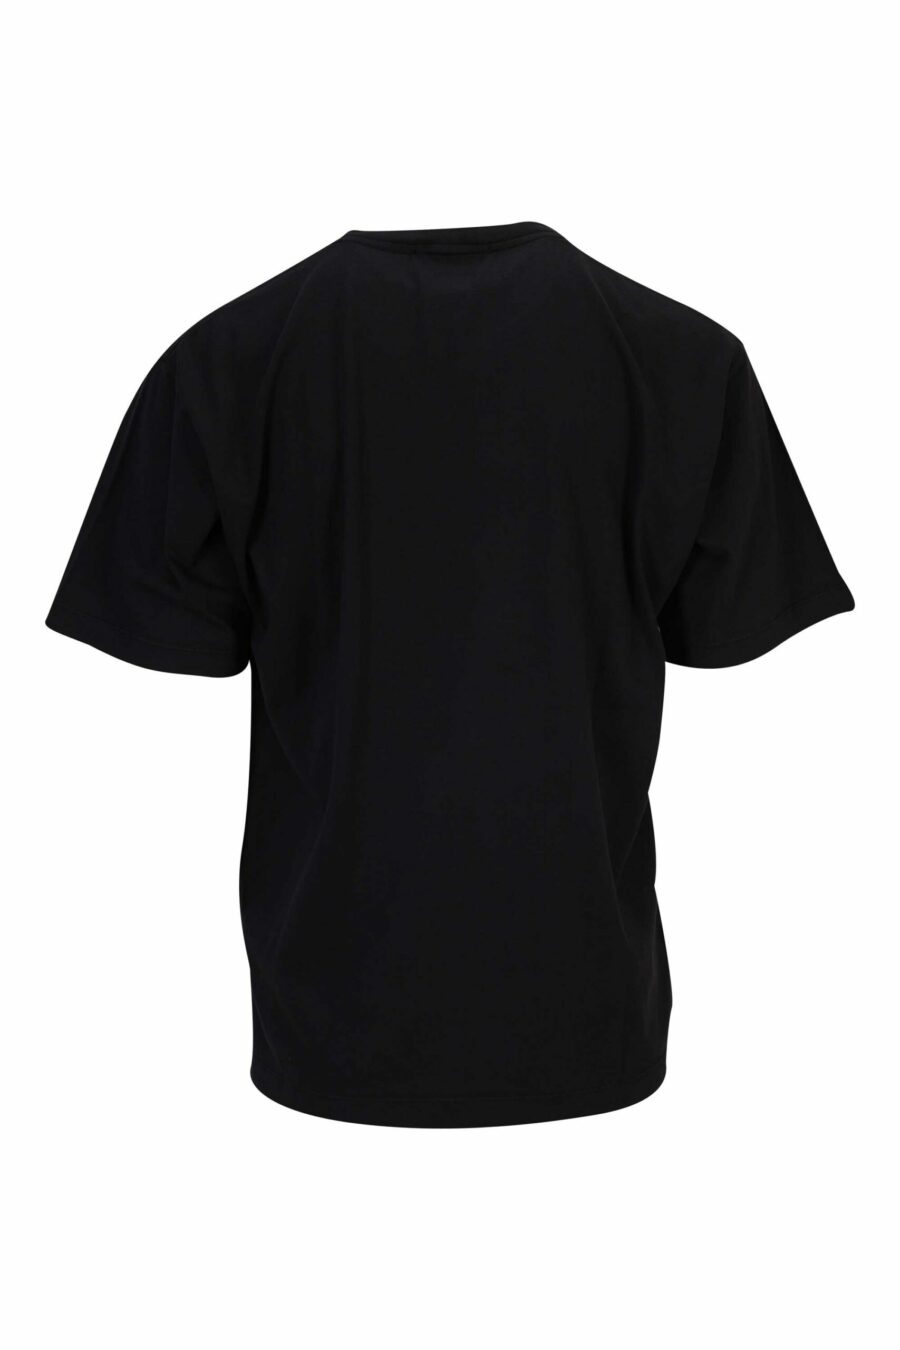 Camiseta negra con maxilogo brújula - 8052572907272 1 scaled